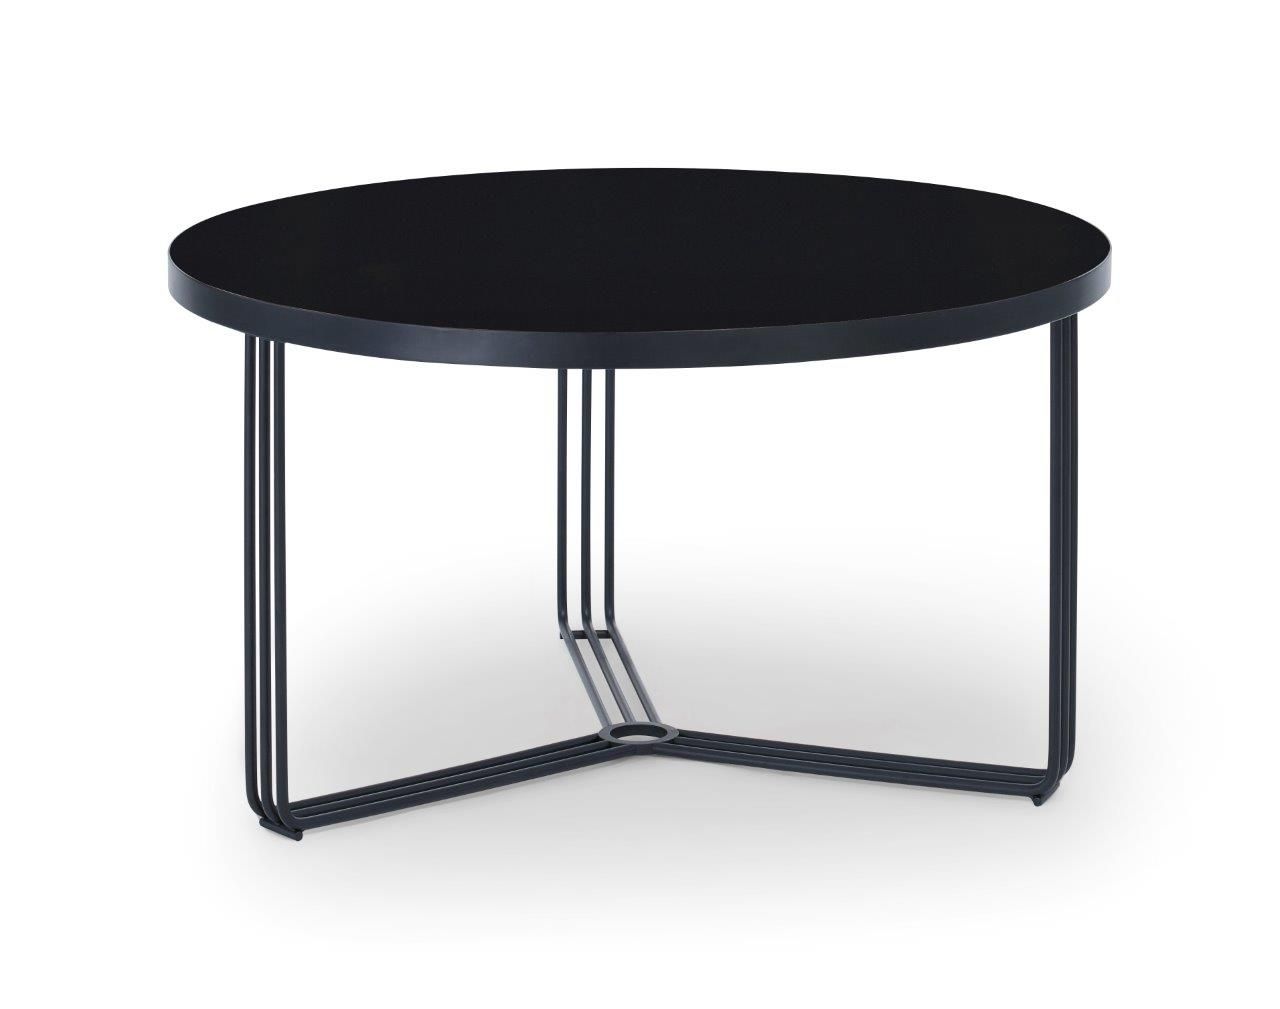 Finn Small Circular Coffee Table, Round Black Glass Side Table